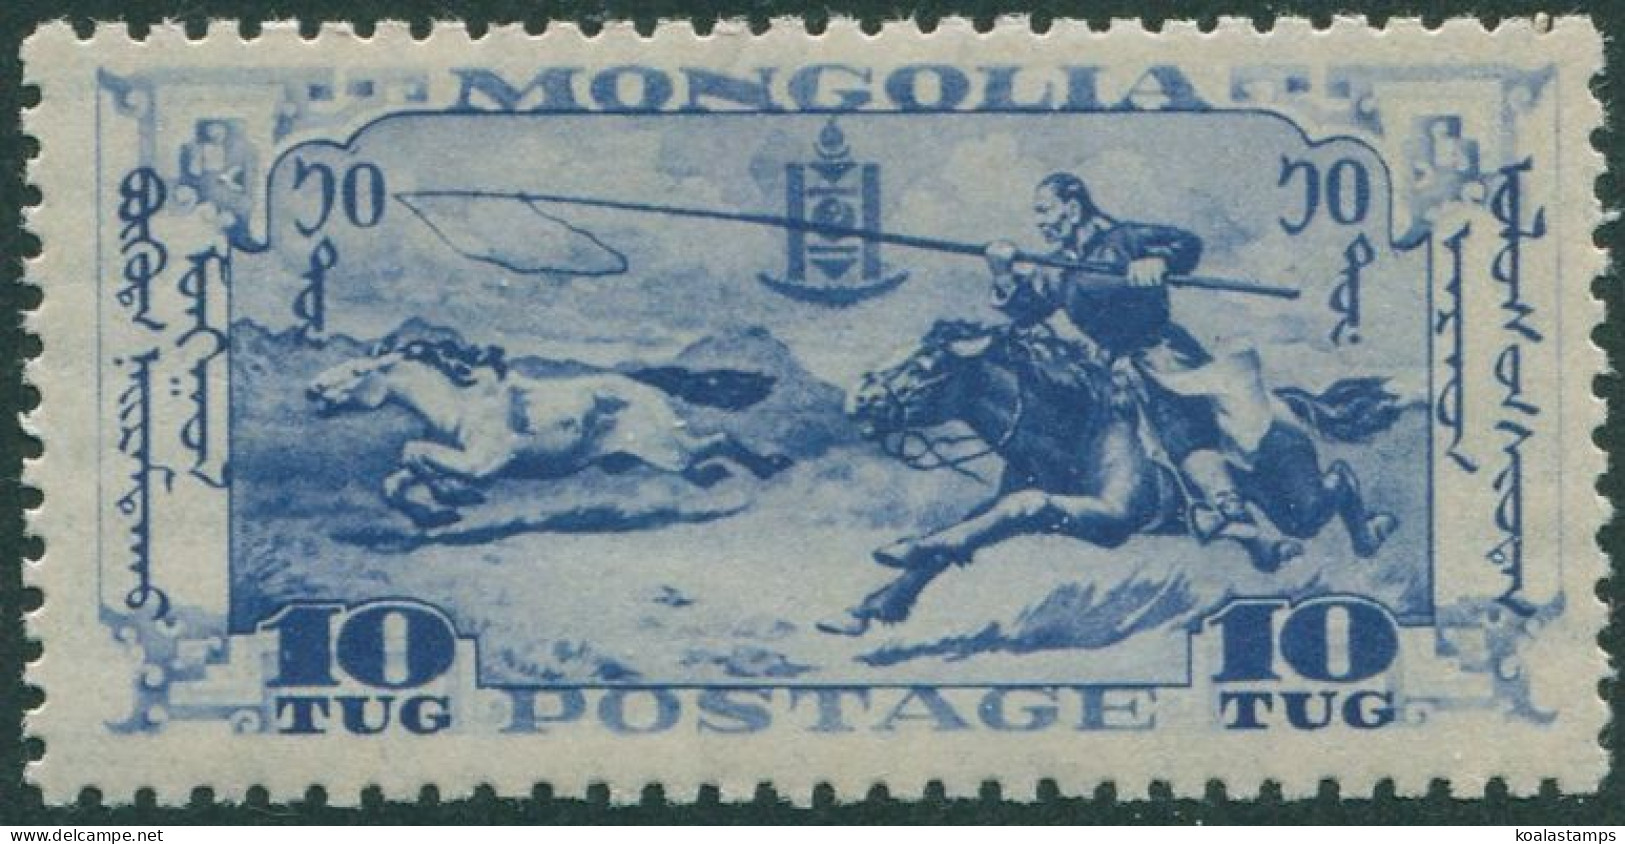 Mongolia 1932 SG58 10t Lassoing Wild Horses Painting MNH - Mongolei